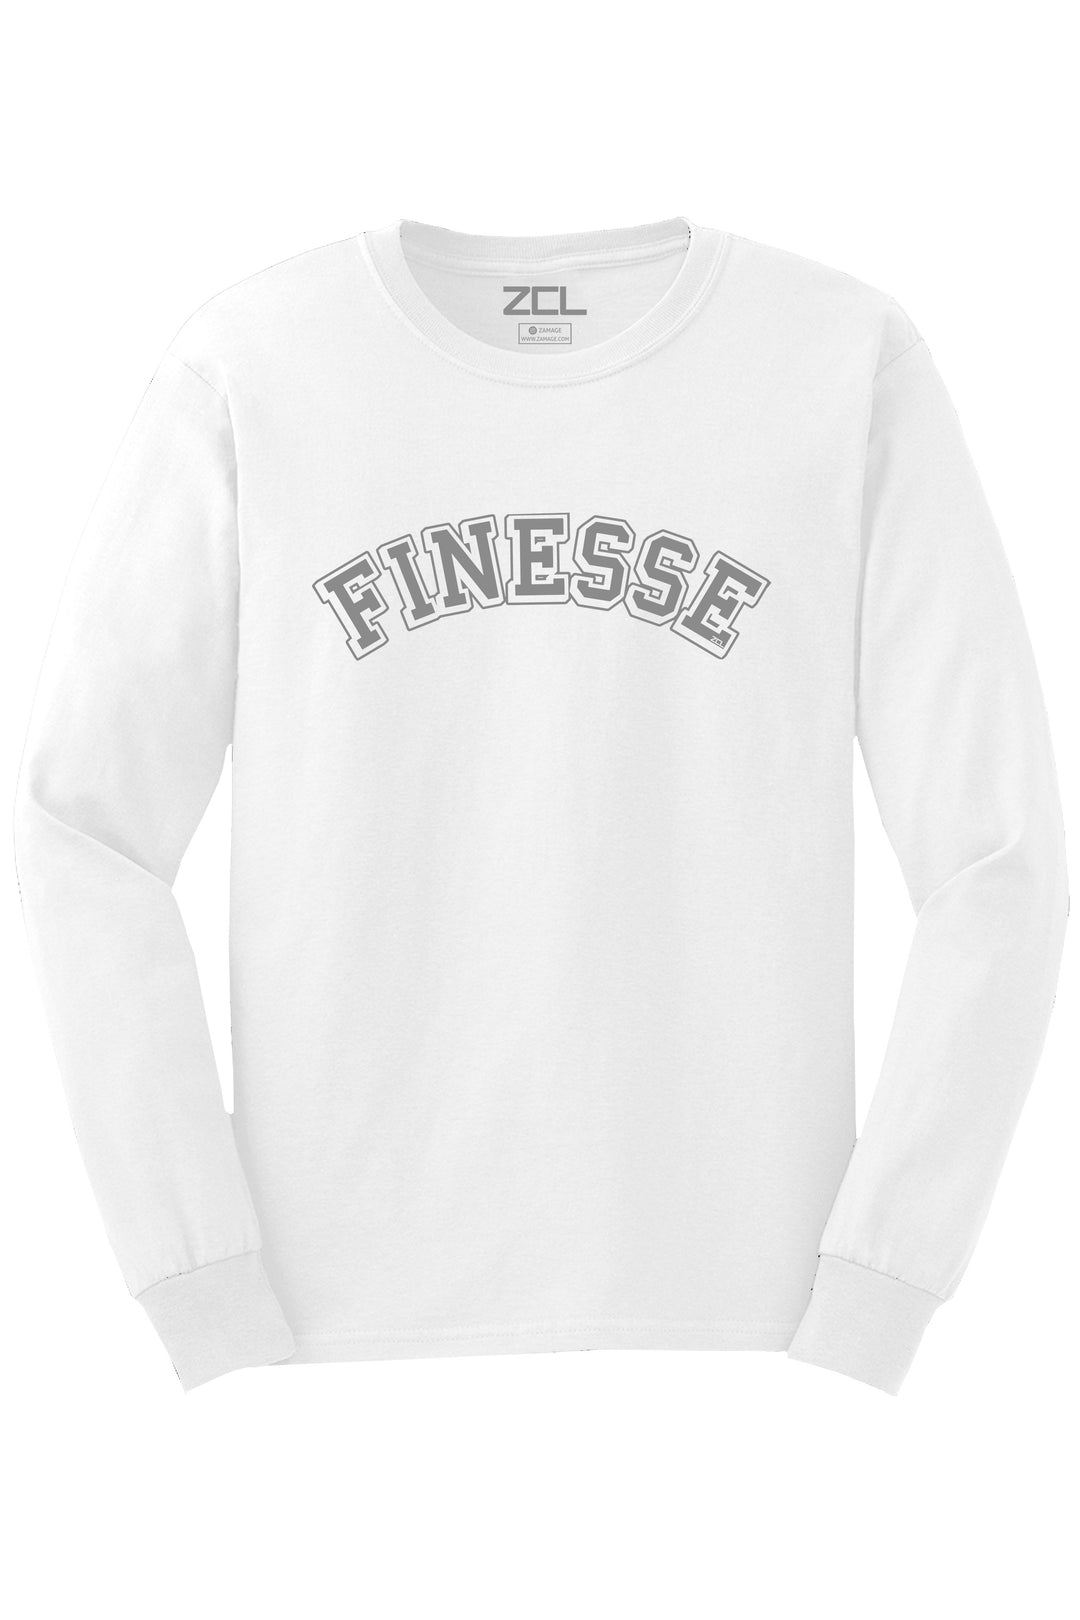 Finesse Long Sleeve Tee (Grey Logo) - Zamage